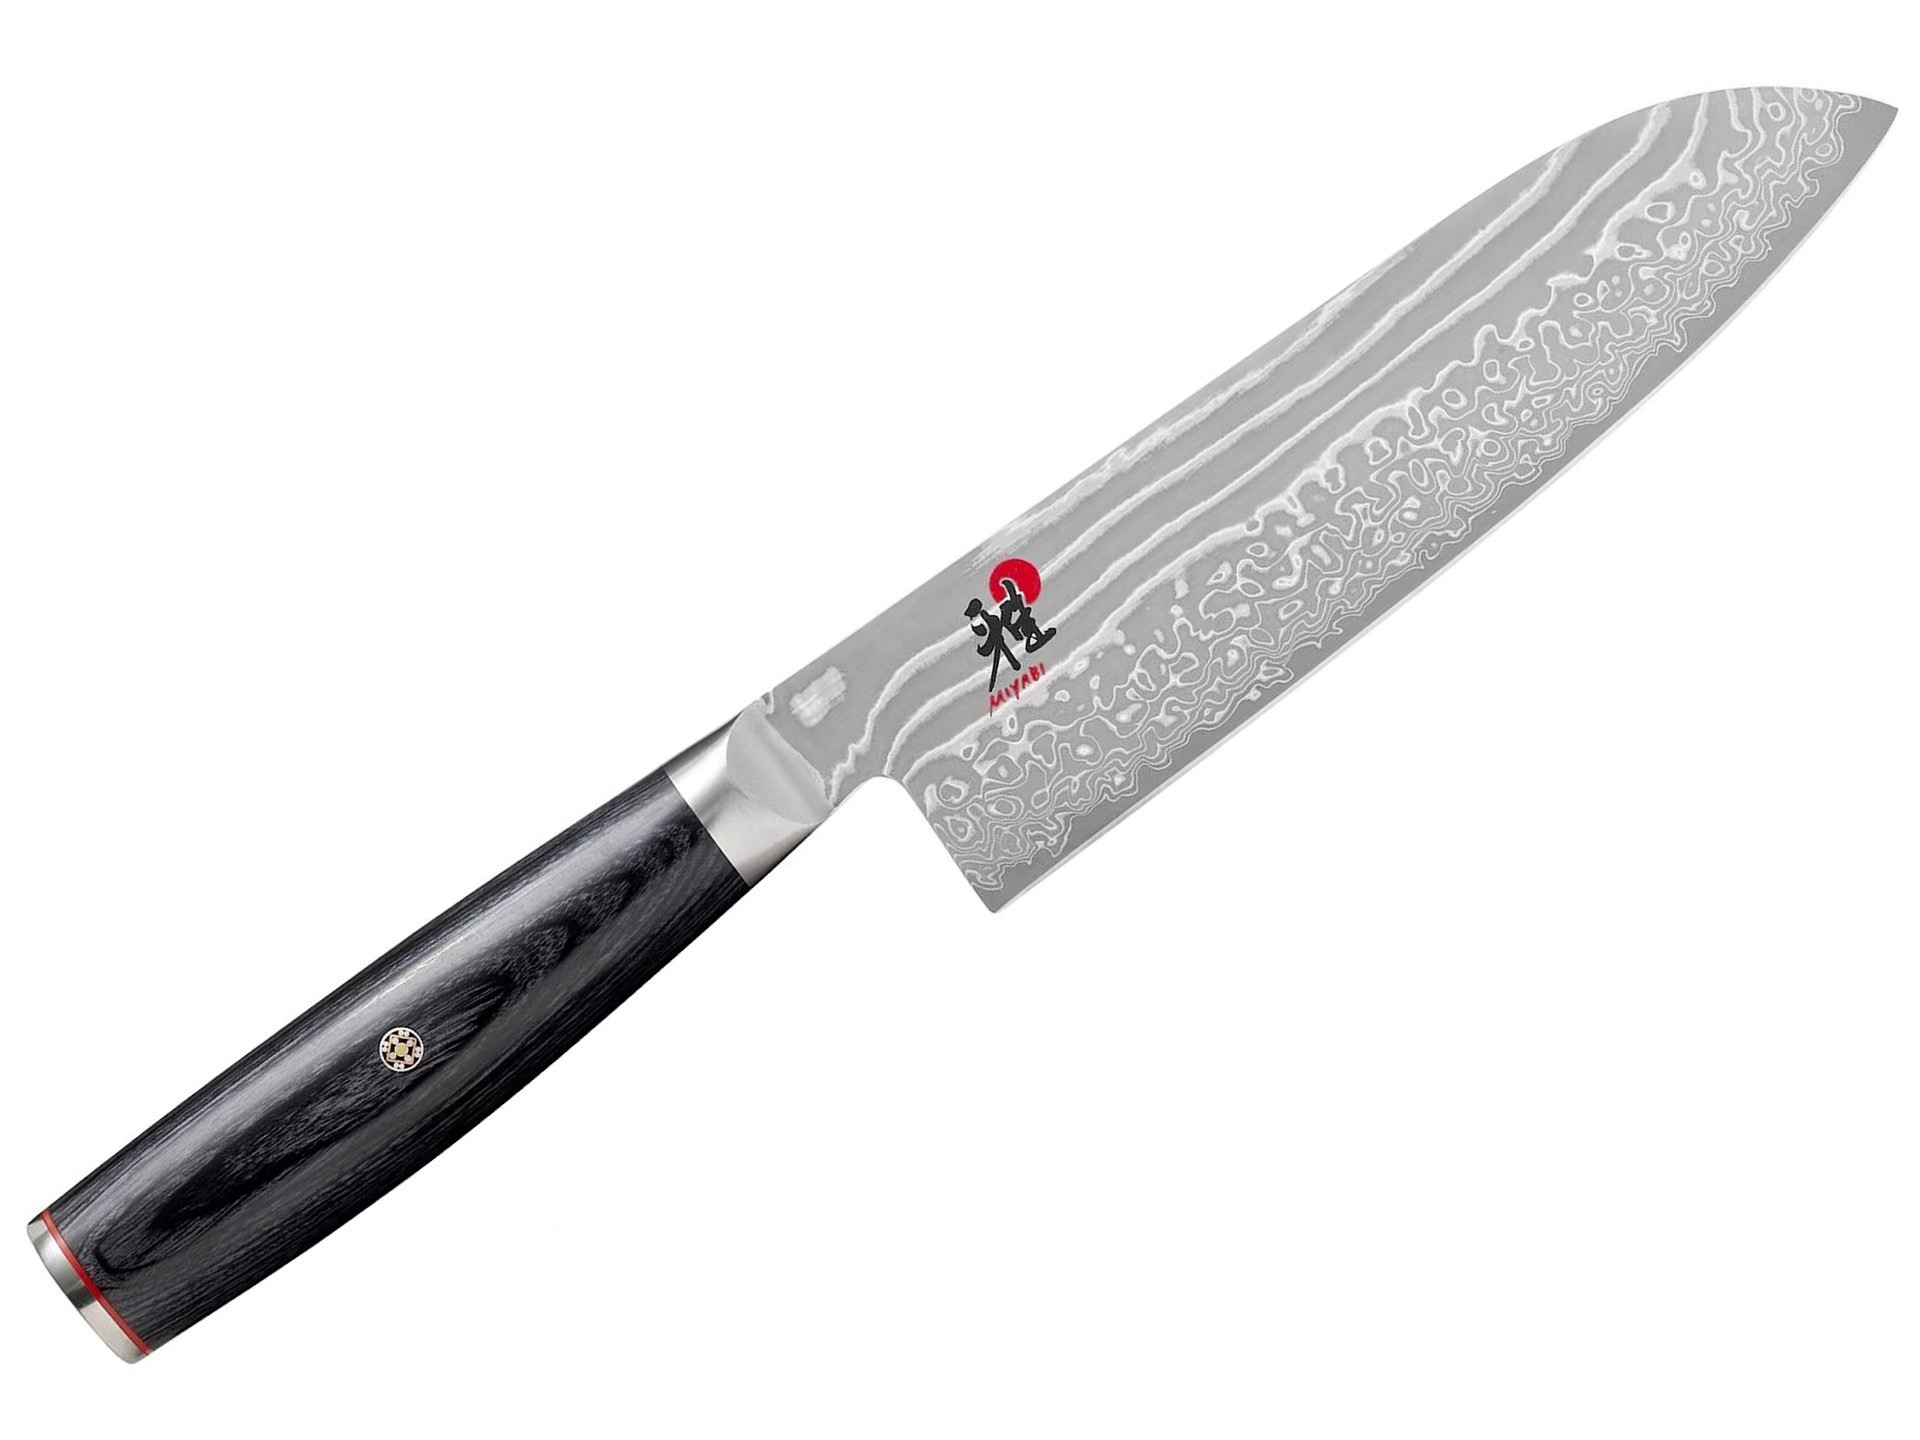 Miyabi Kaizen II Santoku chef knife. ($180)